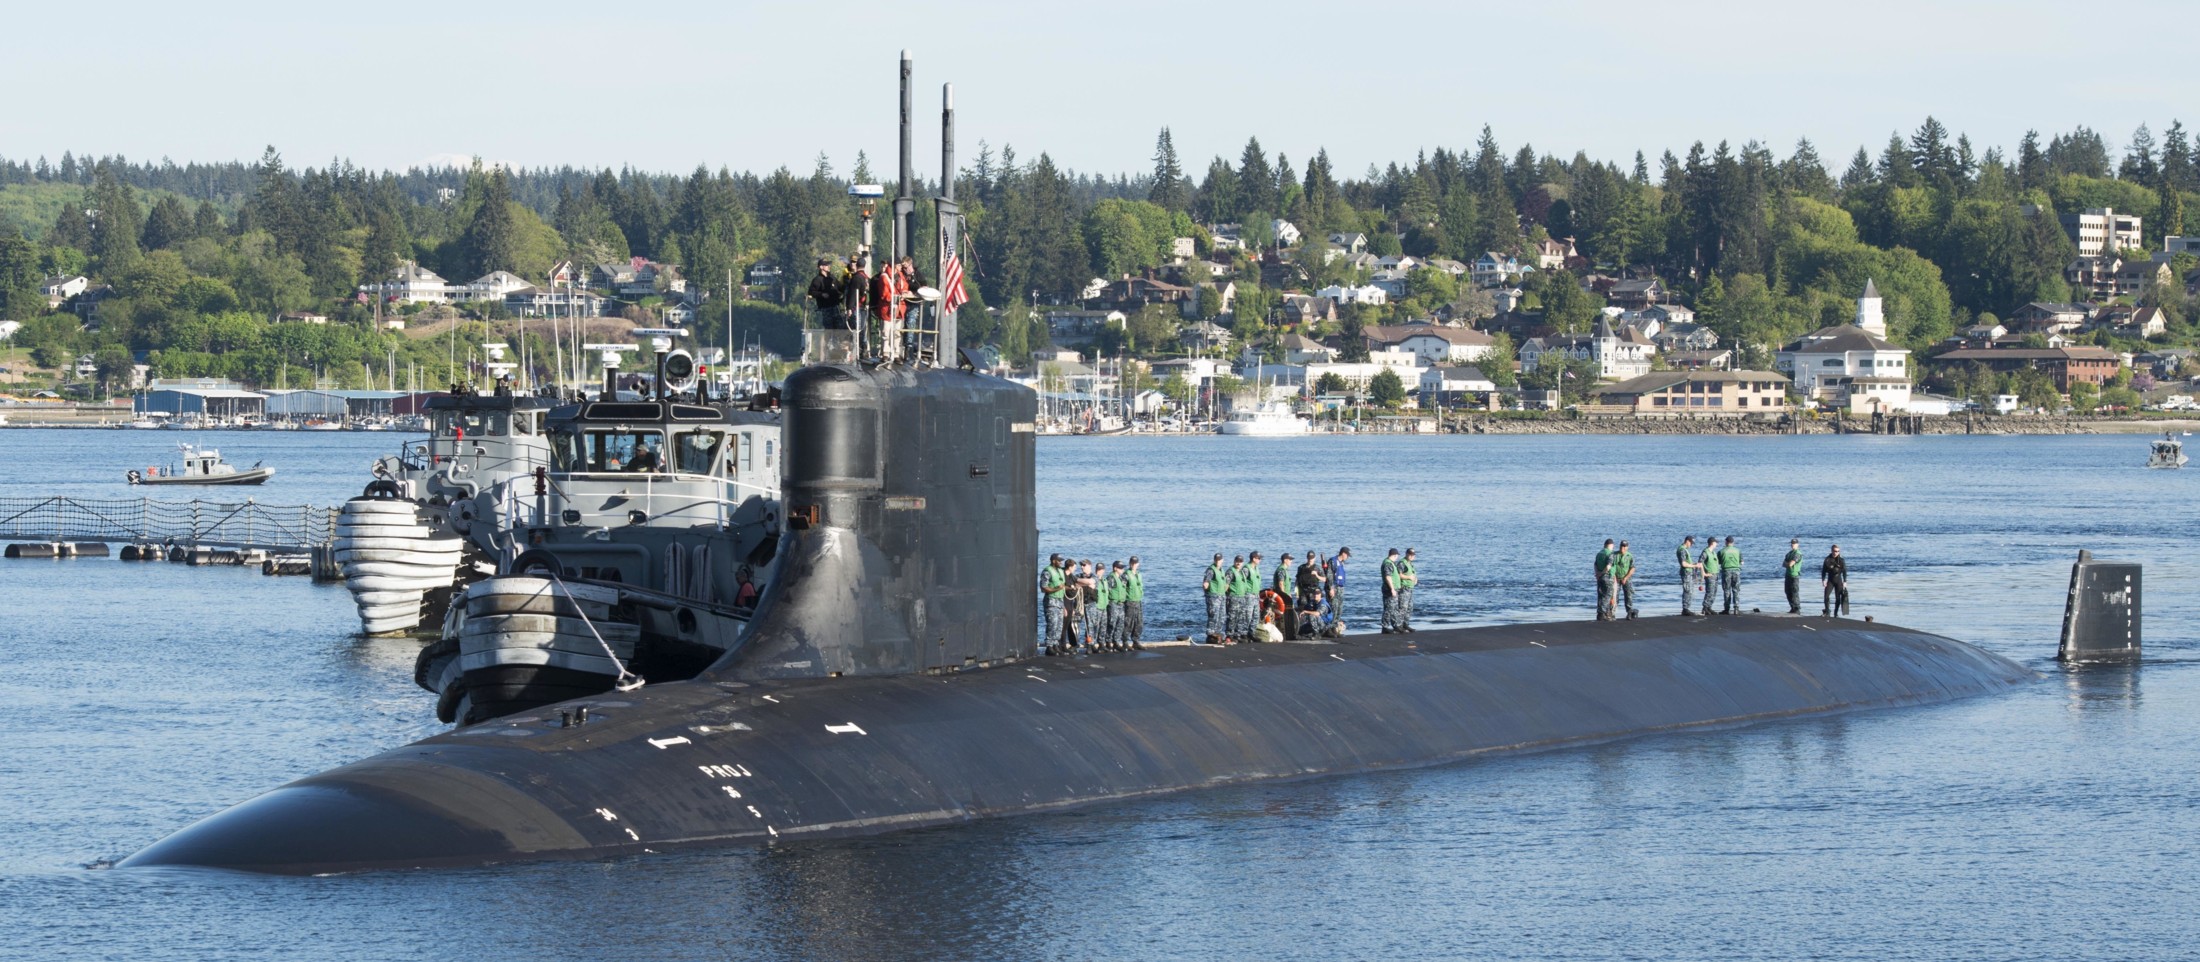 ssn-22 uss connecticut seawolf class attack submarine us navy naval base kitsap bremerton washington 43